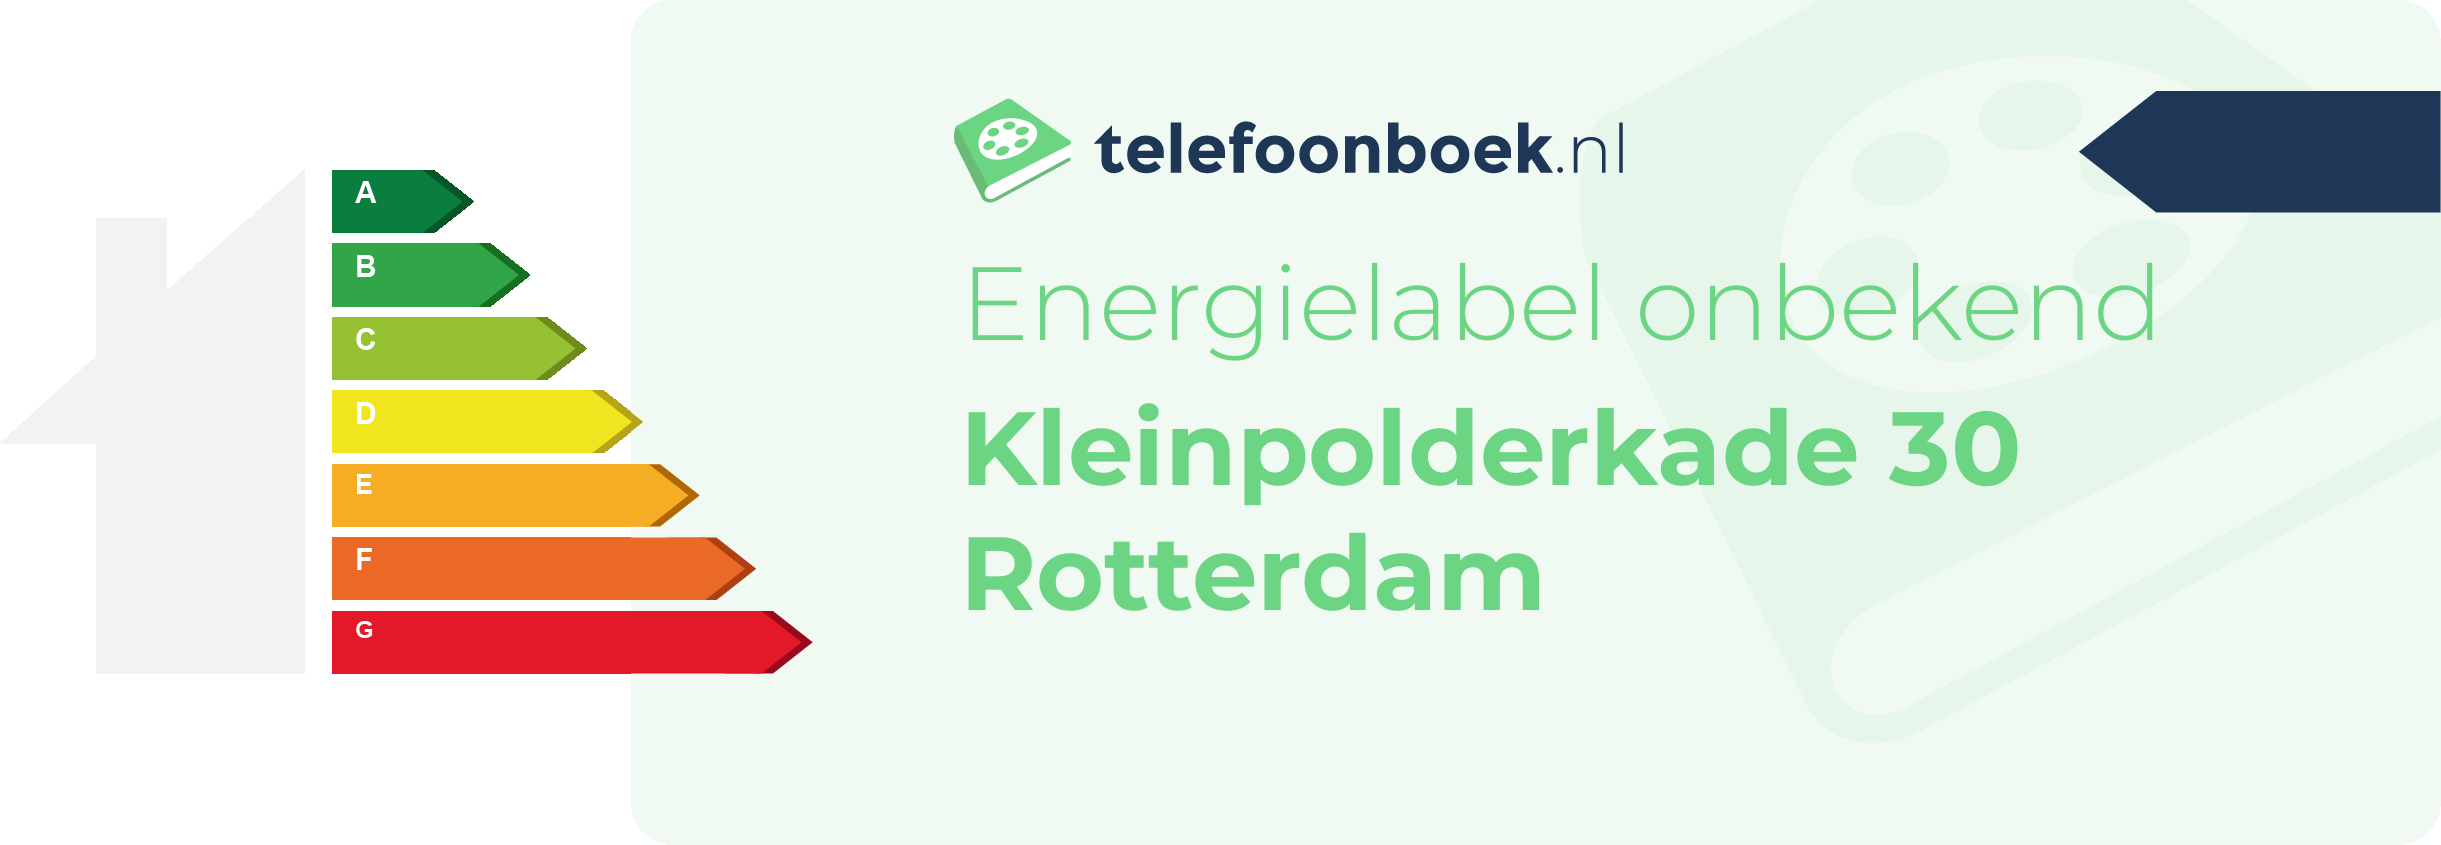 Energielabel Kleinpolderkade 30 Rotterdam